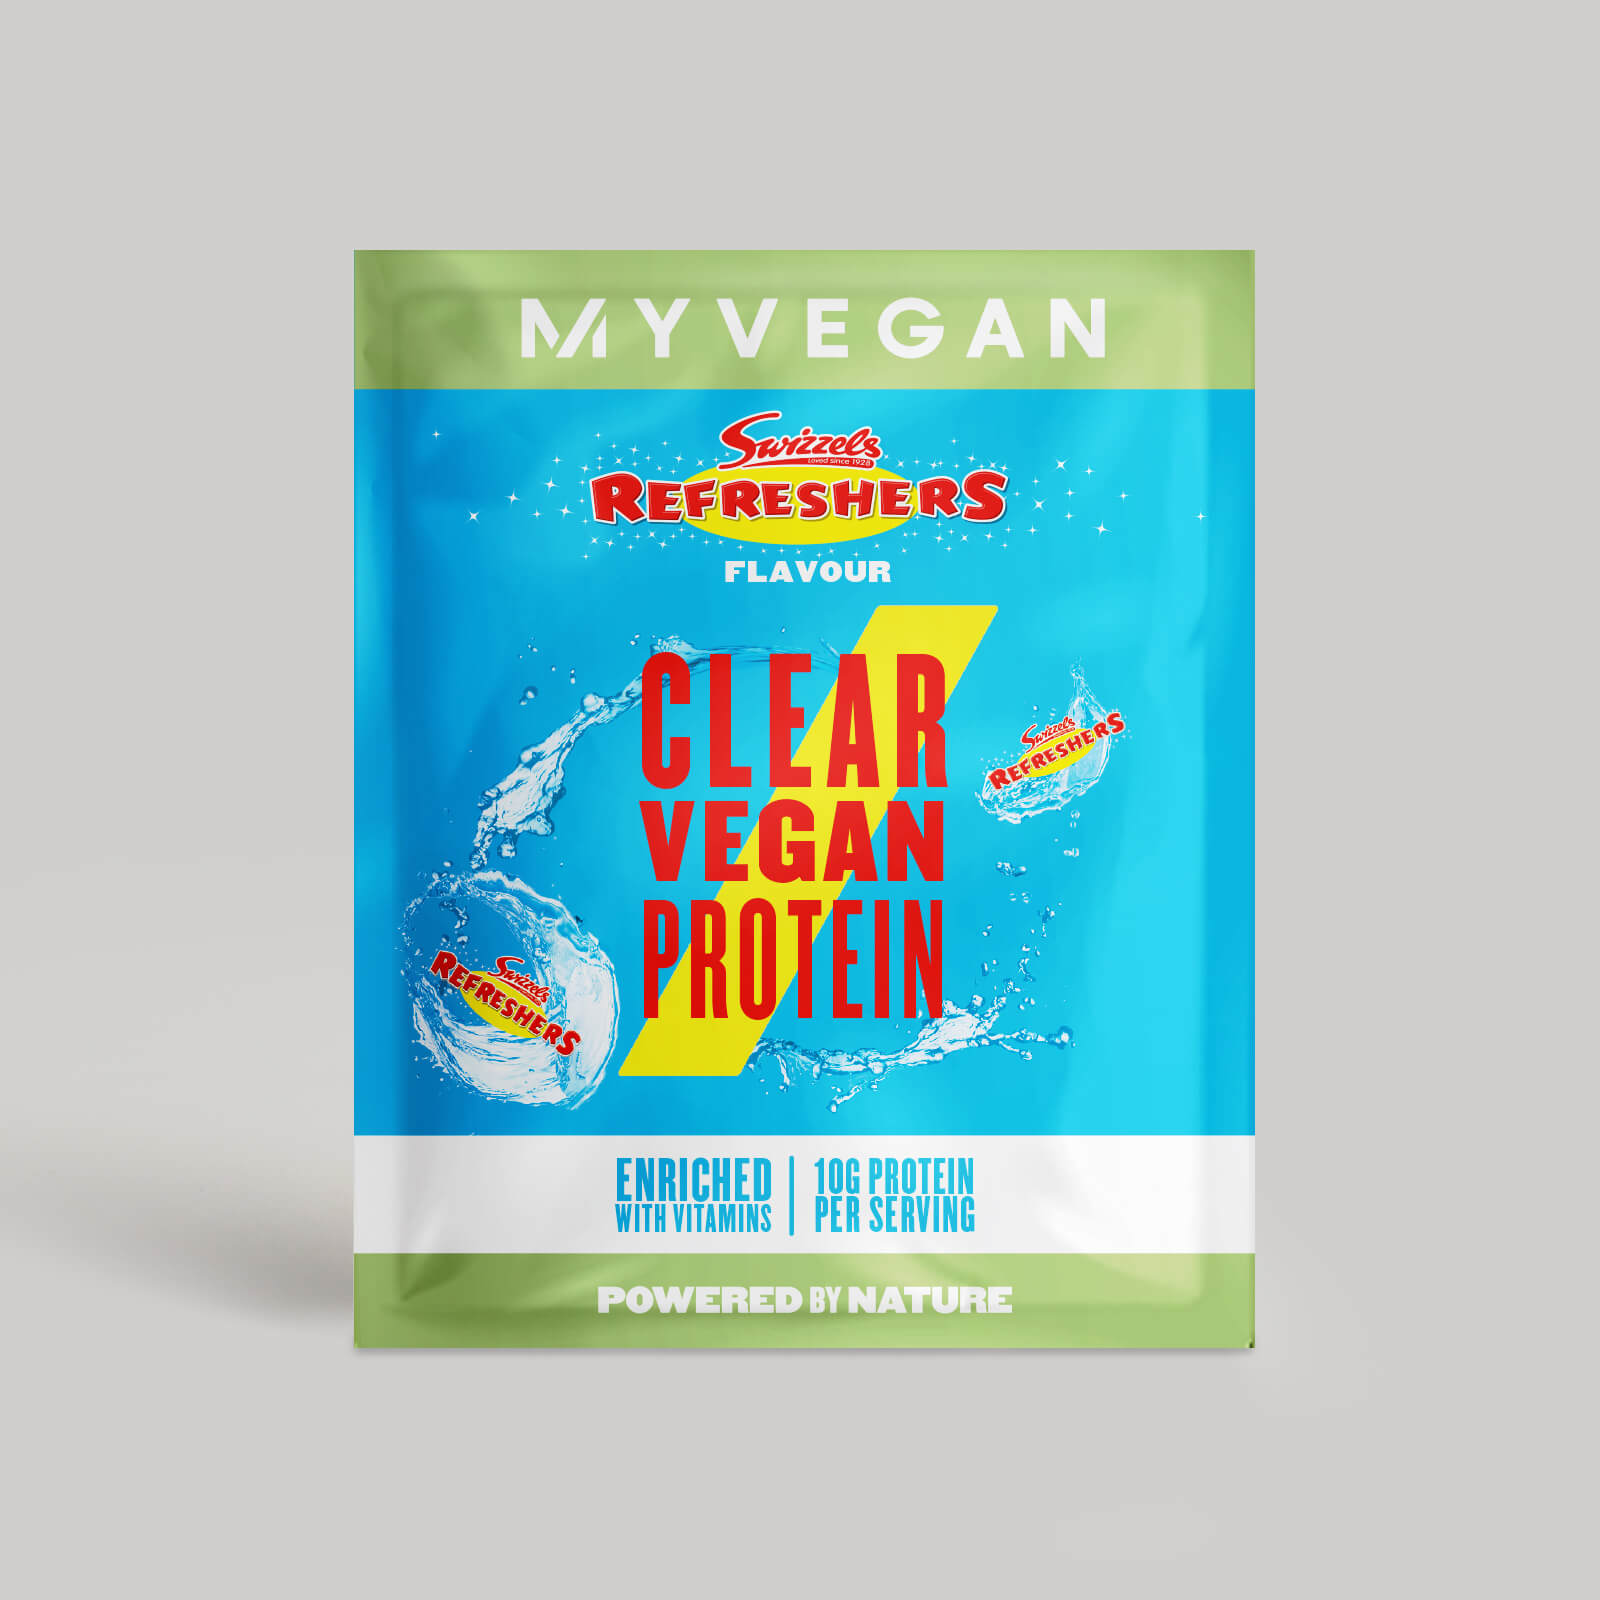 Myvegan Clear Vegan Protein (Sample) - 16g - Swizzels - Refreshers